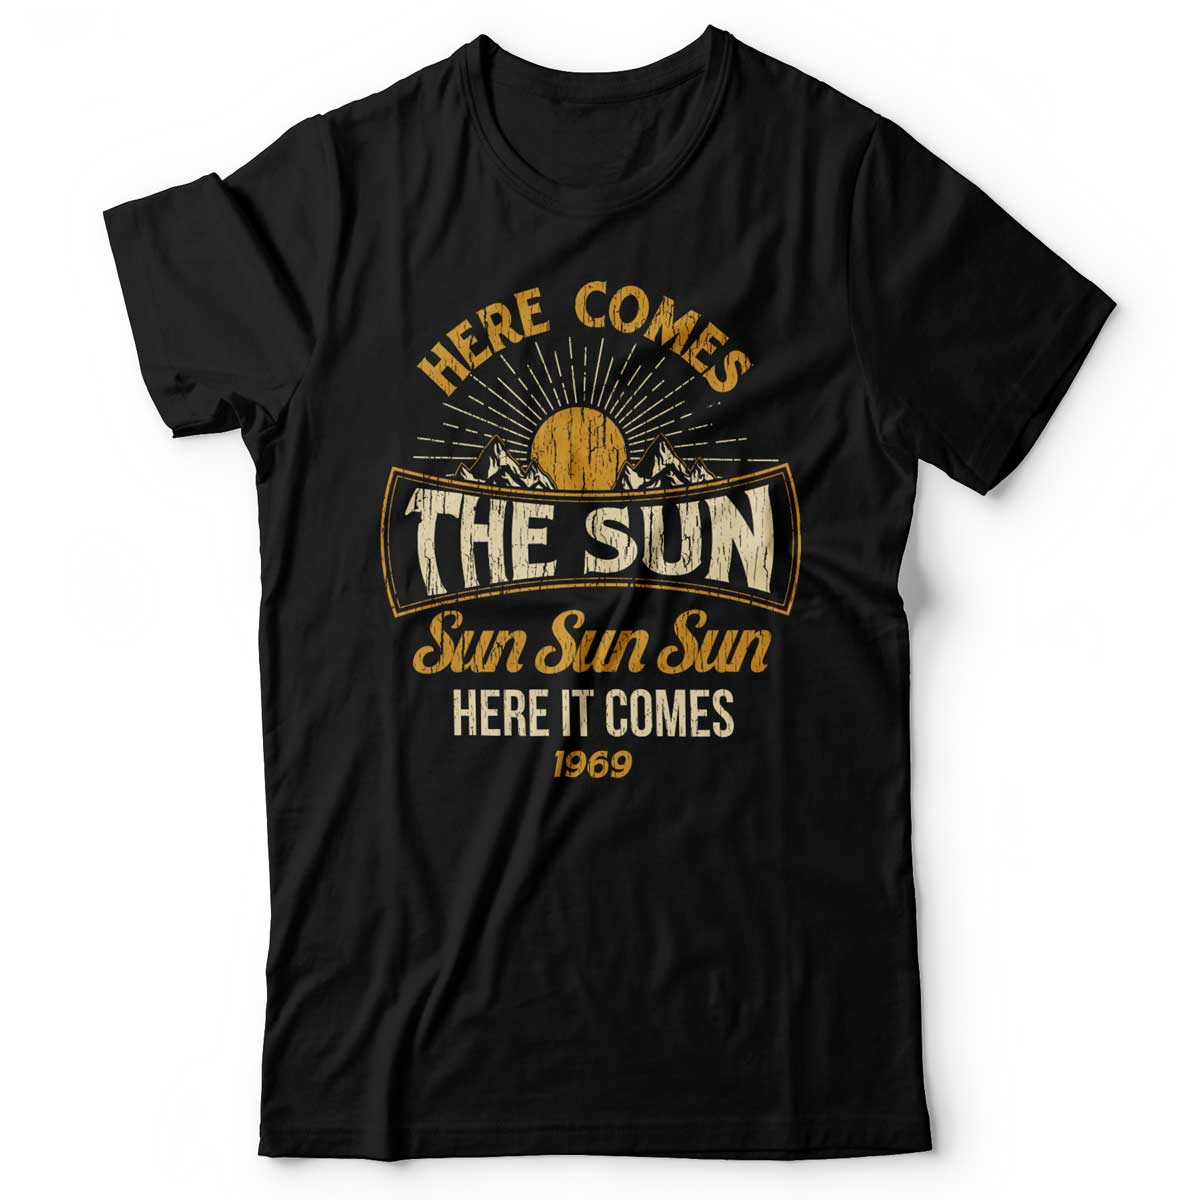 The Beatles - Here Comes The Sun - Men's T-Shirt Black